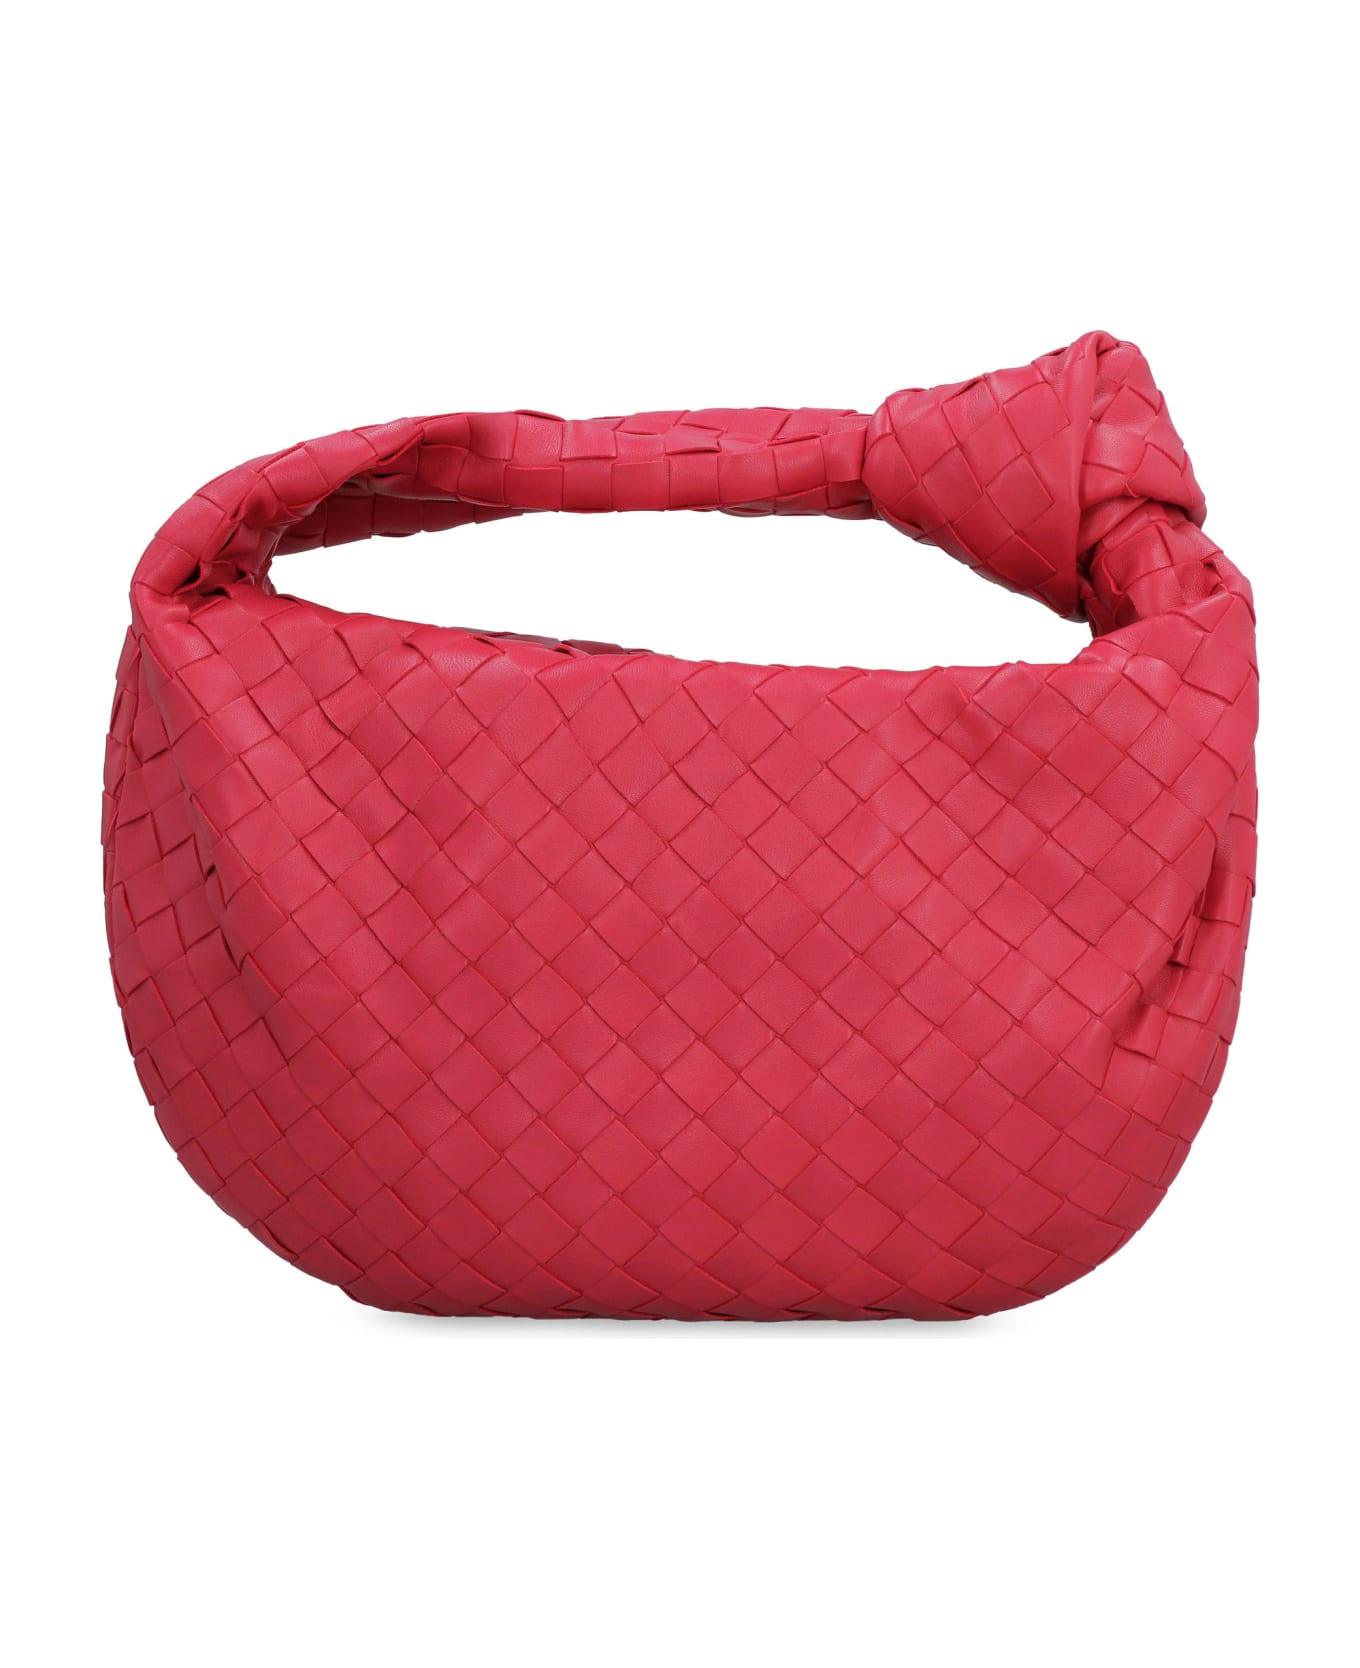 Bottega Veneta Teen Jodie Leather Shoulder Bag - Red